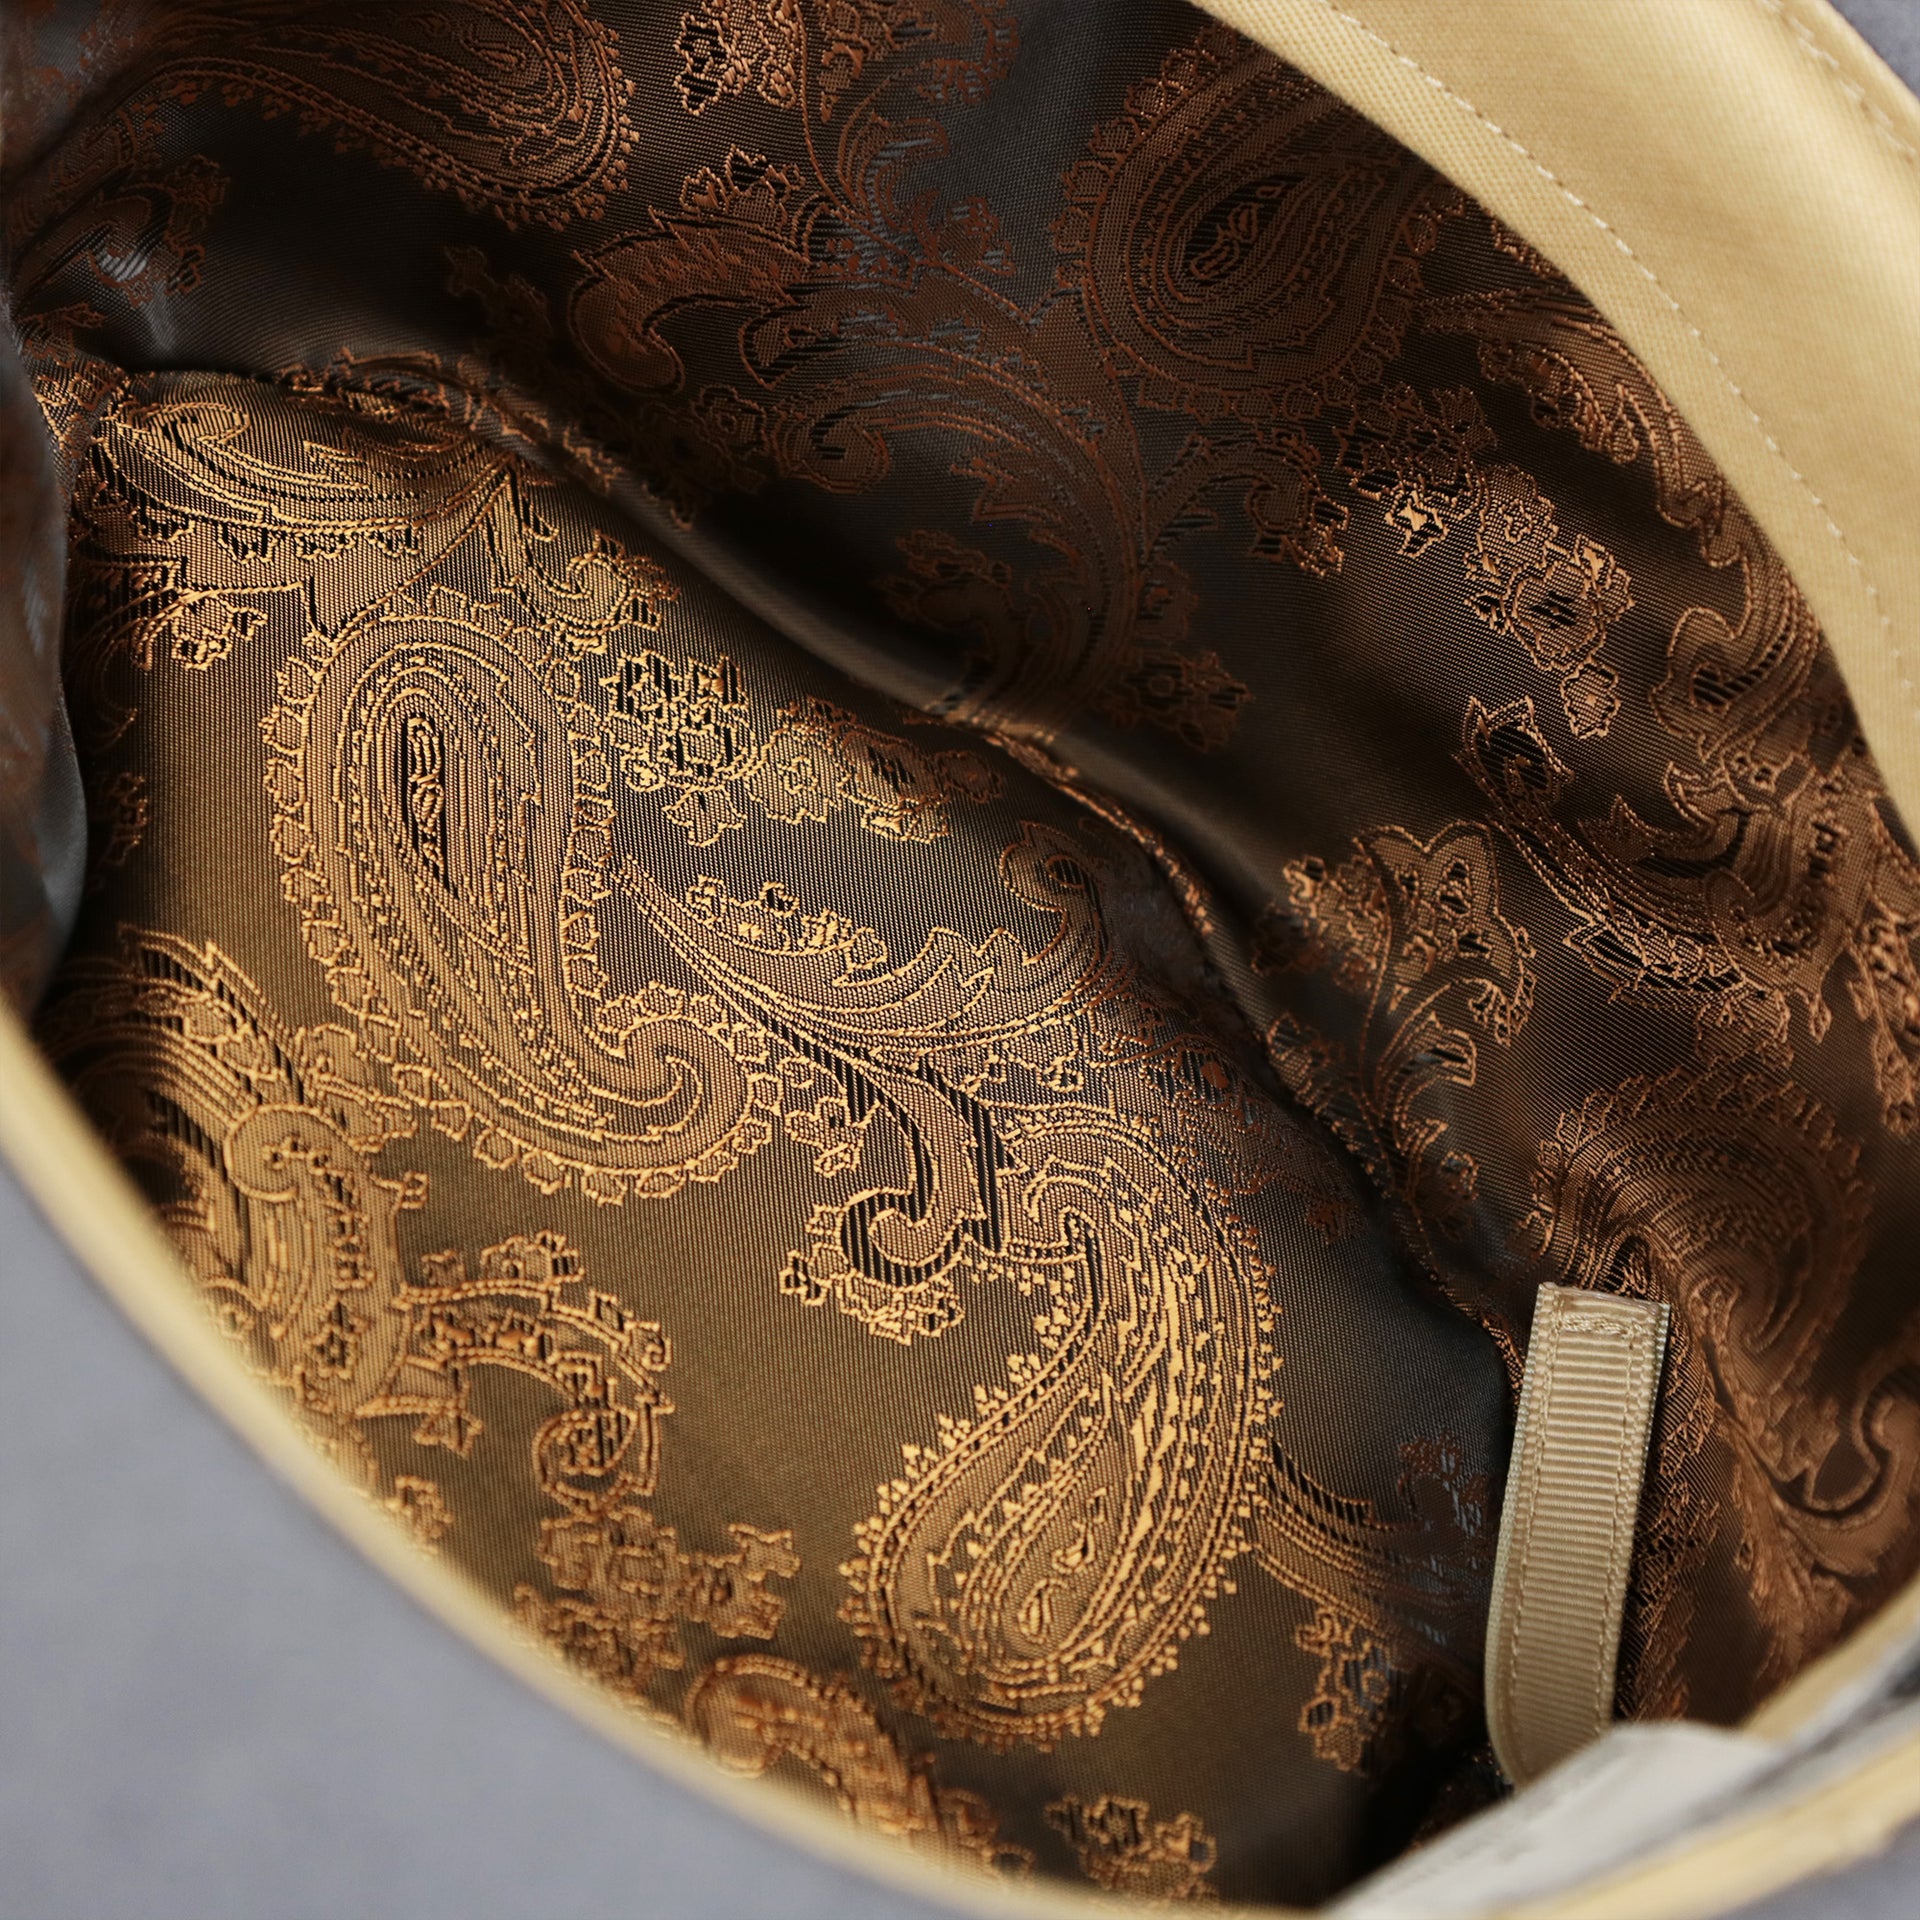 The interior of the Wide Brim Raw Edge Gray Fedora Hat with Black Silk Interior | Zertrue 100% Australian Wool